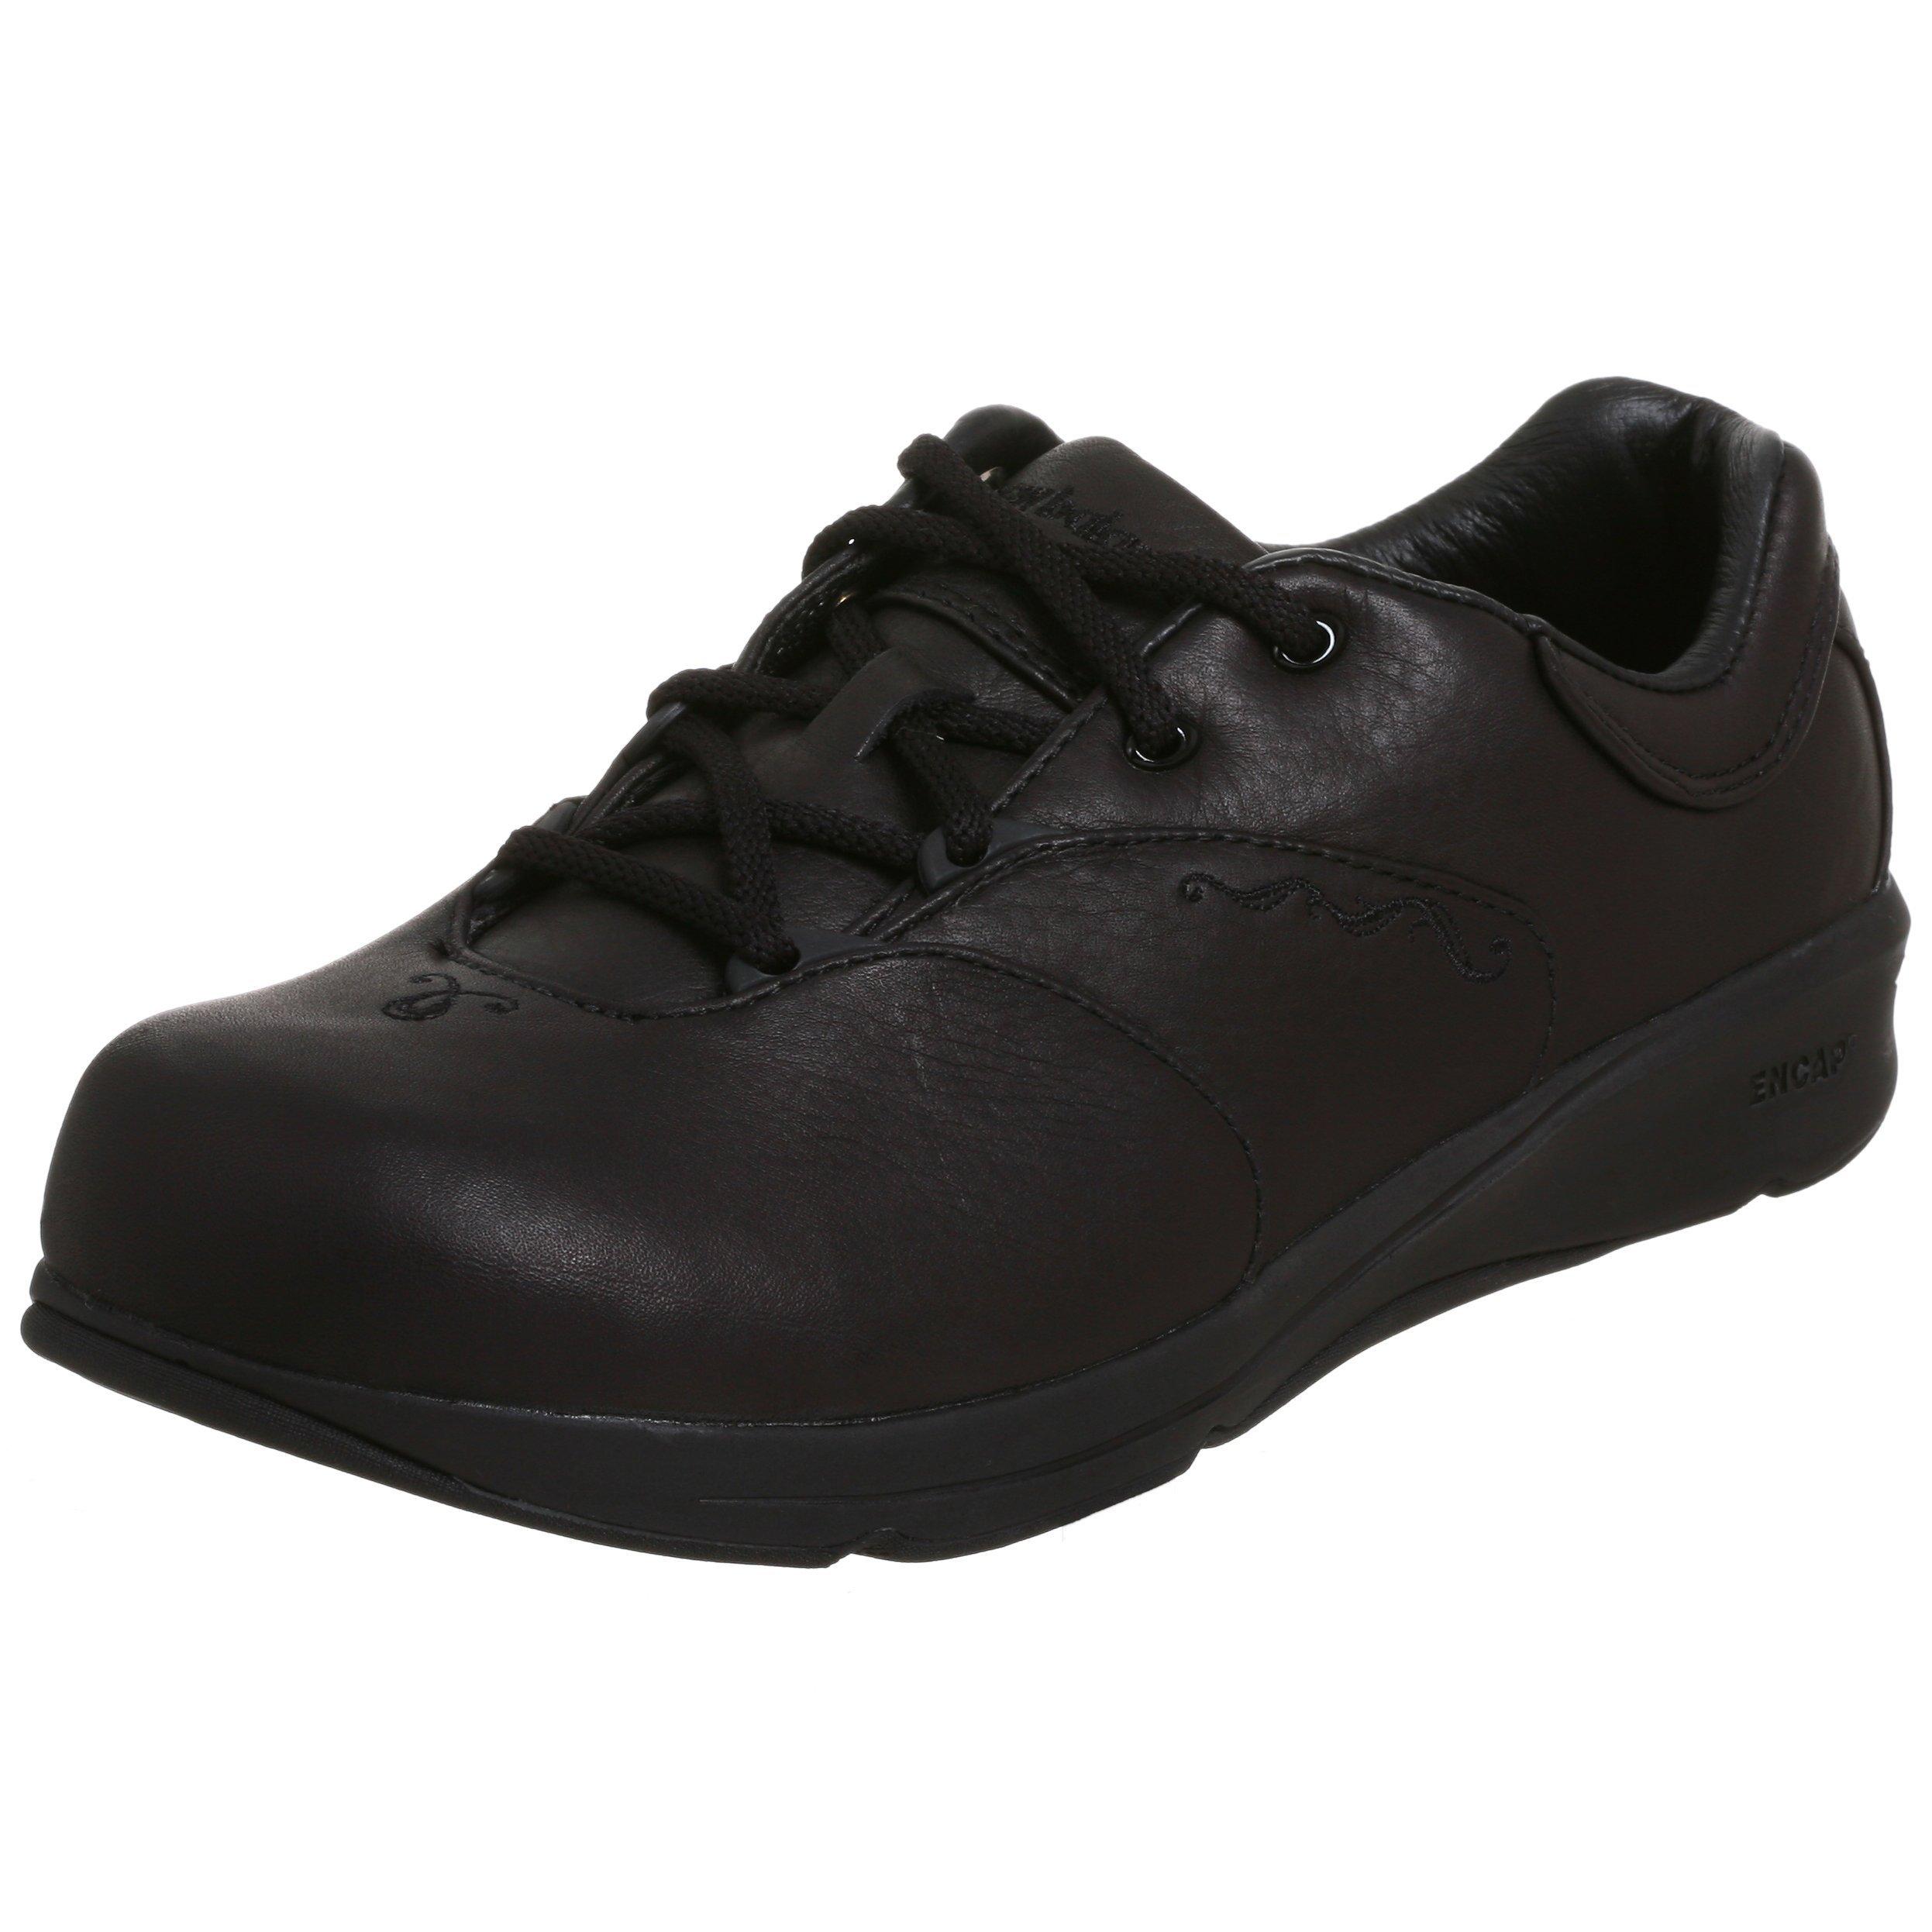 New Balance 901 V1 Walking Shoe in Black | Lyst